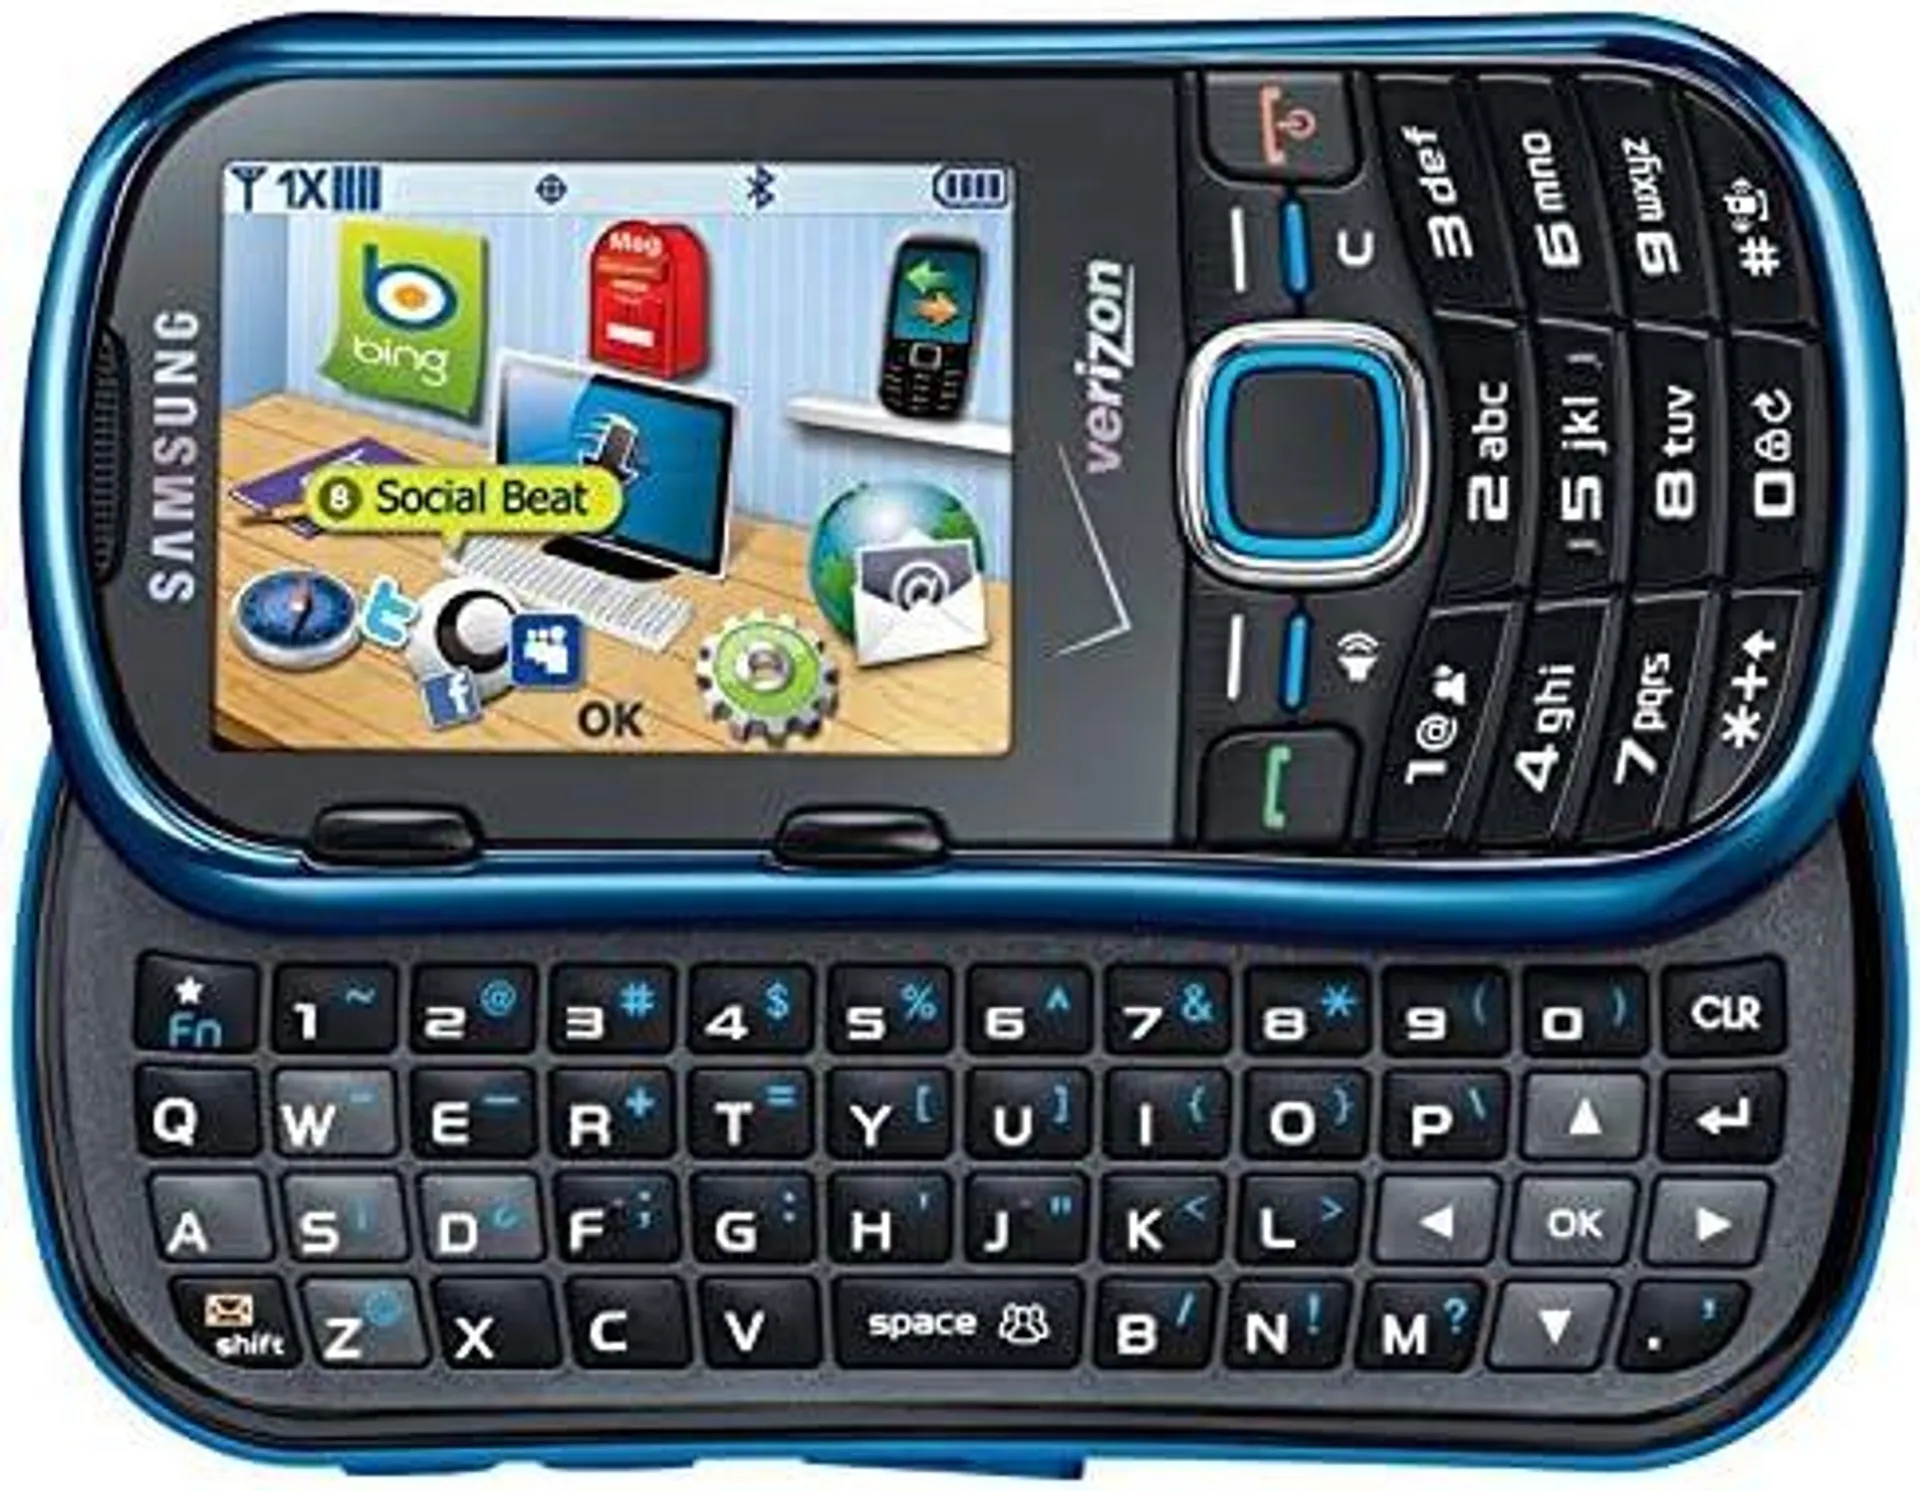 Samsung Intensity II U460 Blue (Verizon) Slide Phone